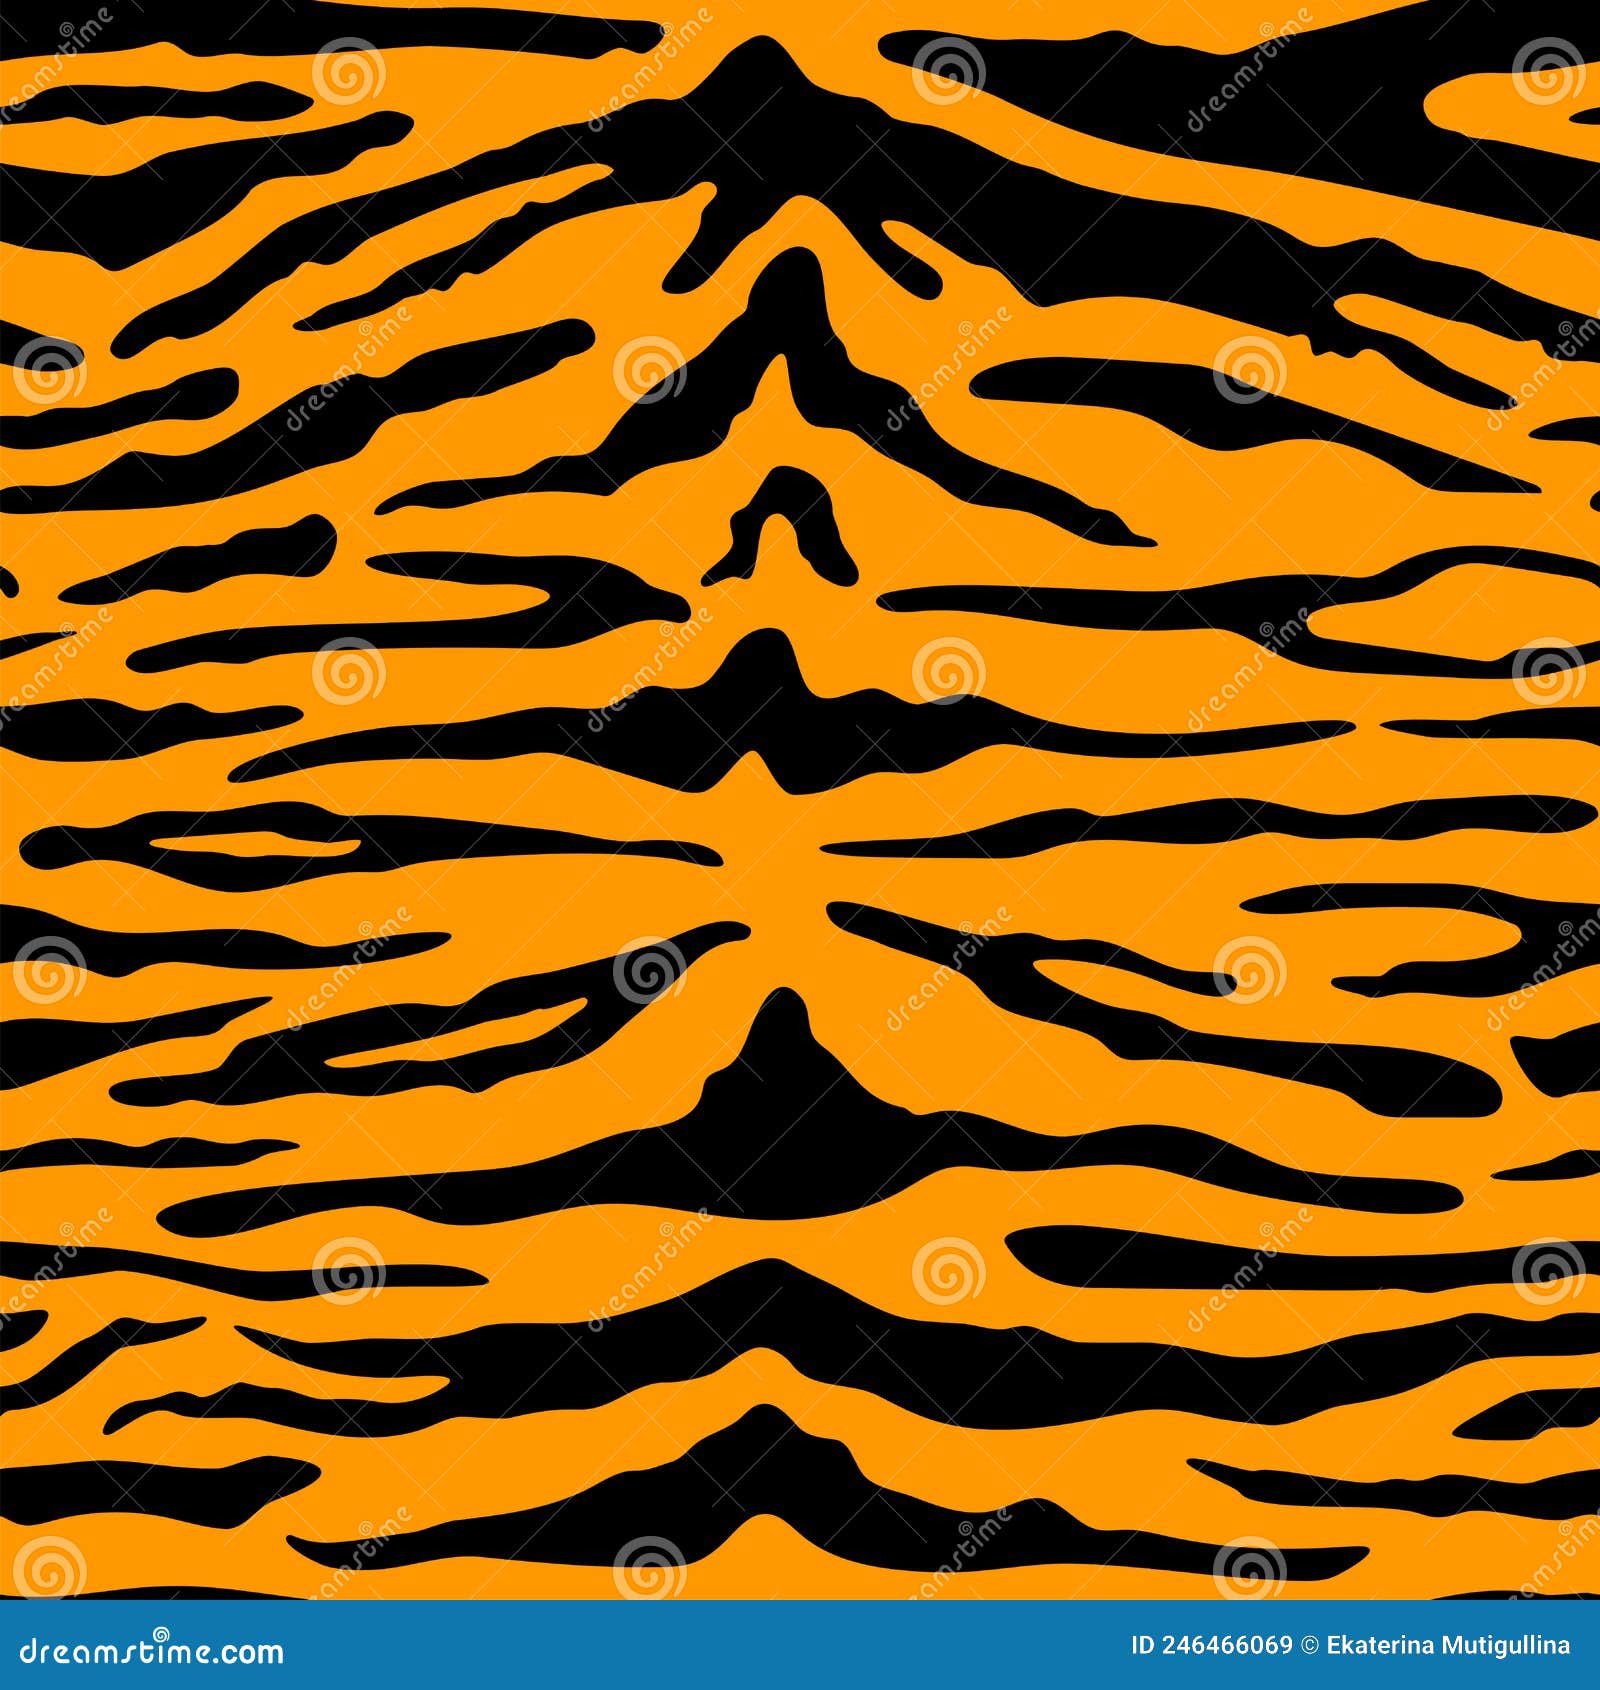 Tiger Print Background. Vector Wild Animal Skin Texture, Black Stripes ...